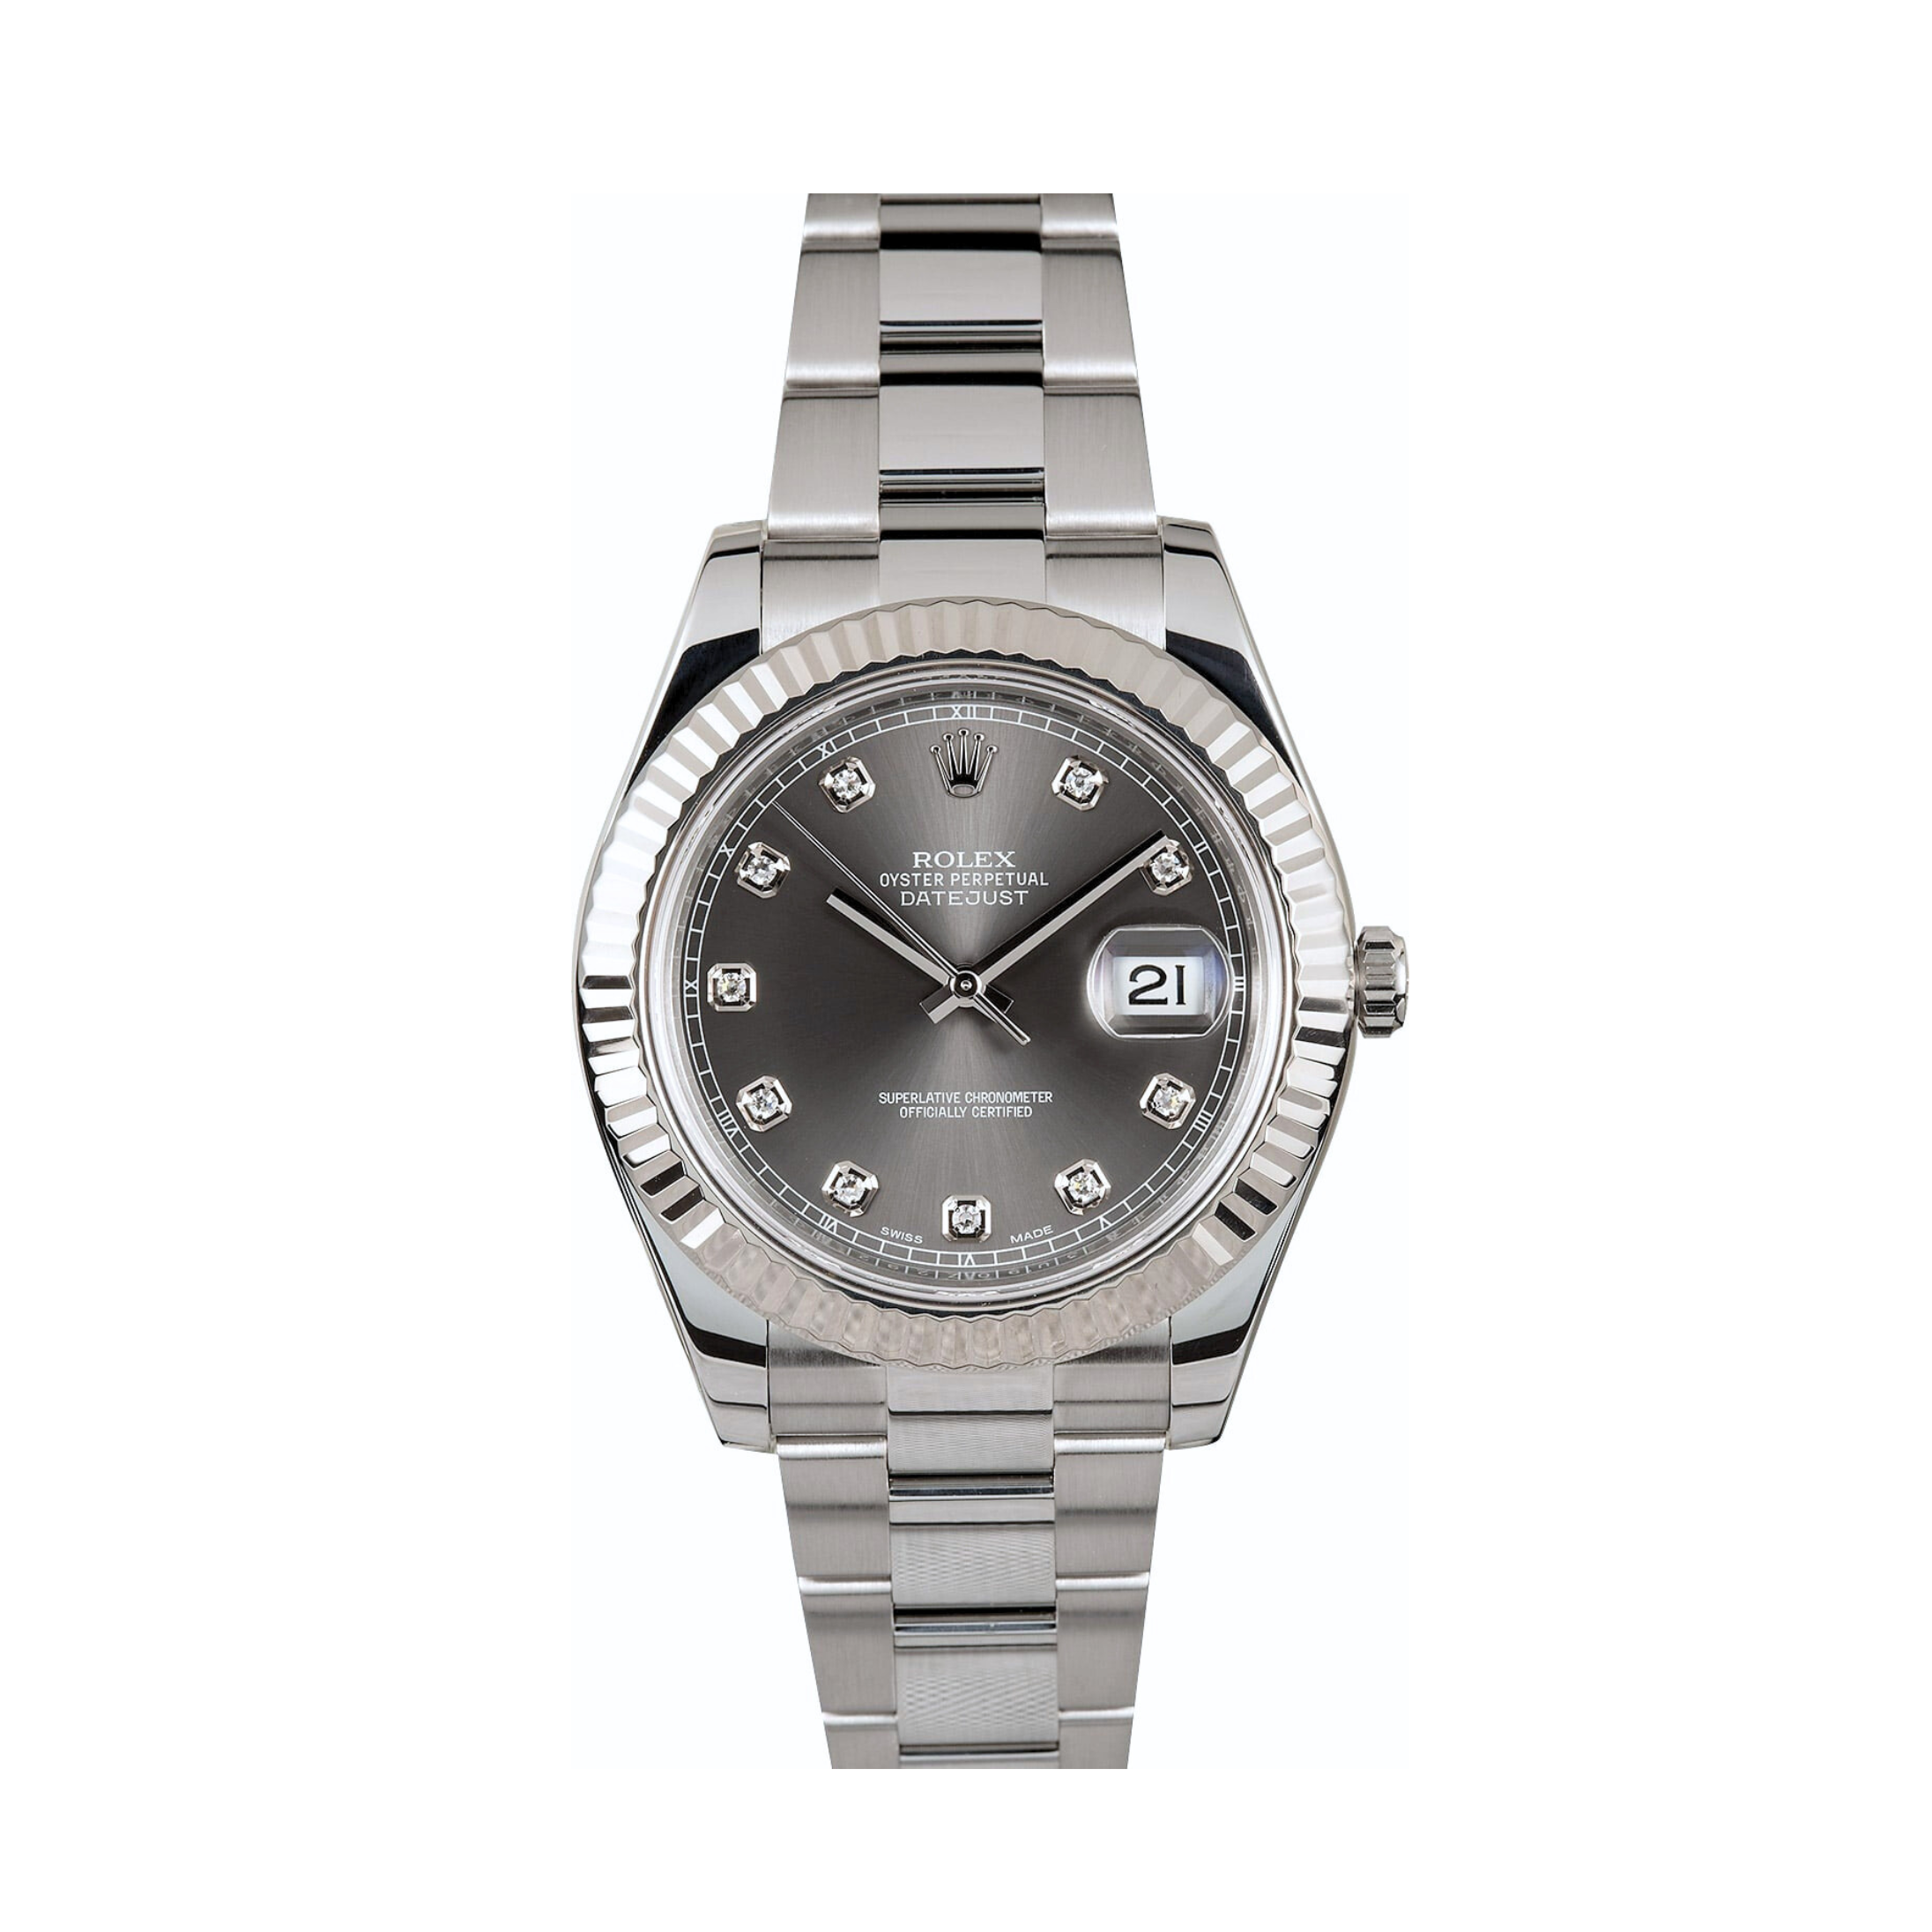 Đồng hồ Rolex 116334 - 41mm